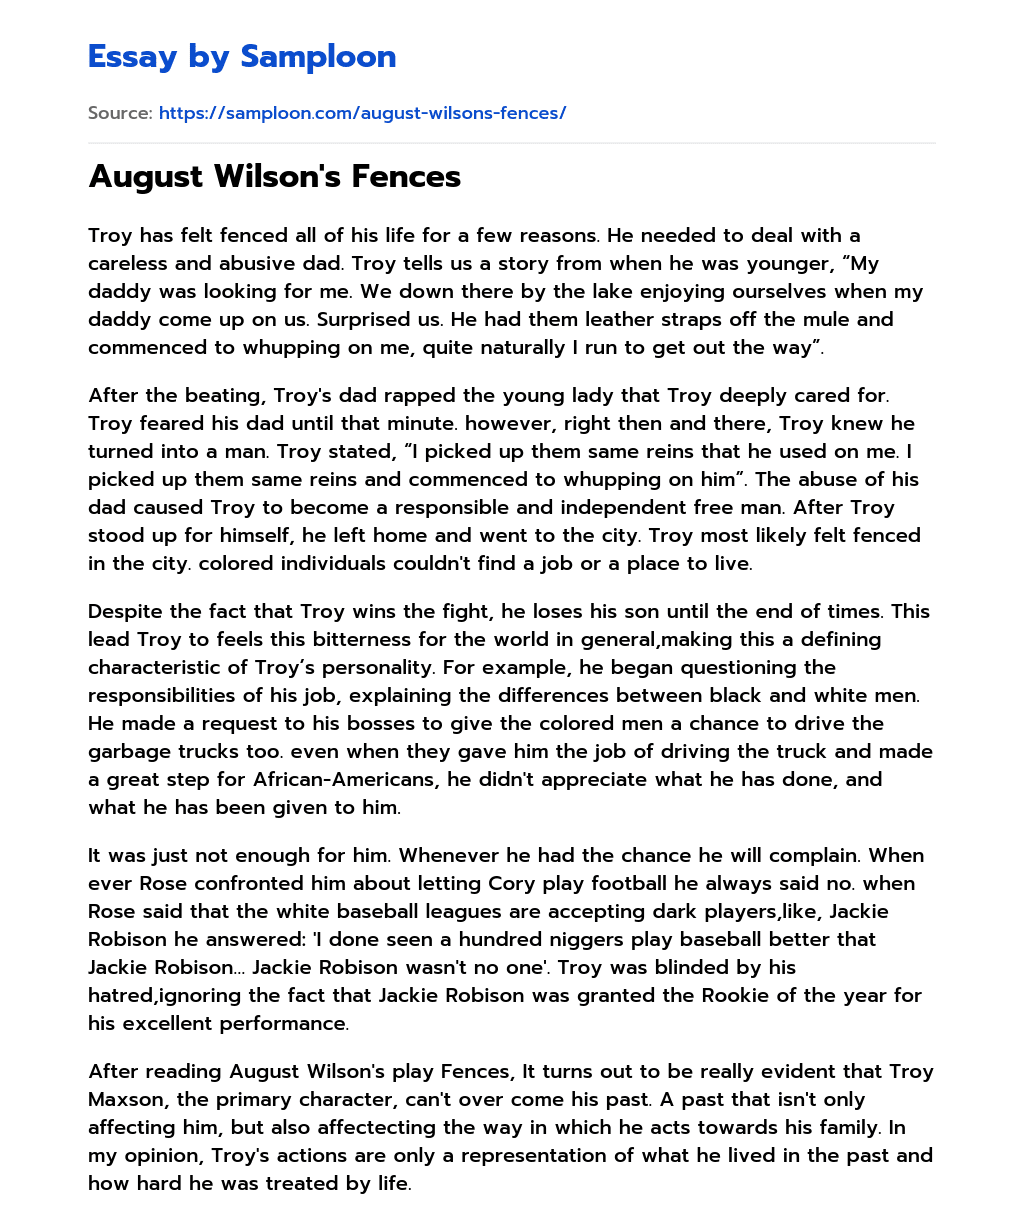 August Wilson’s Fences essay